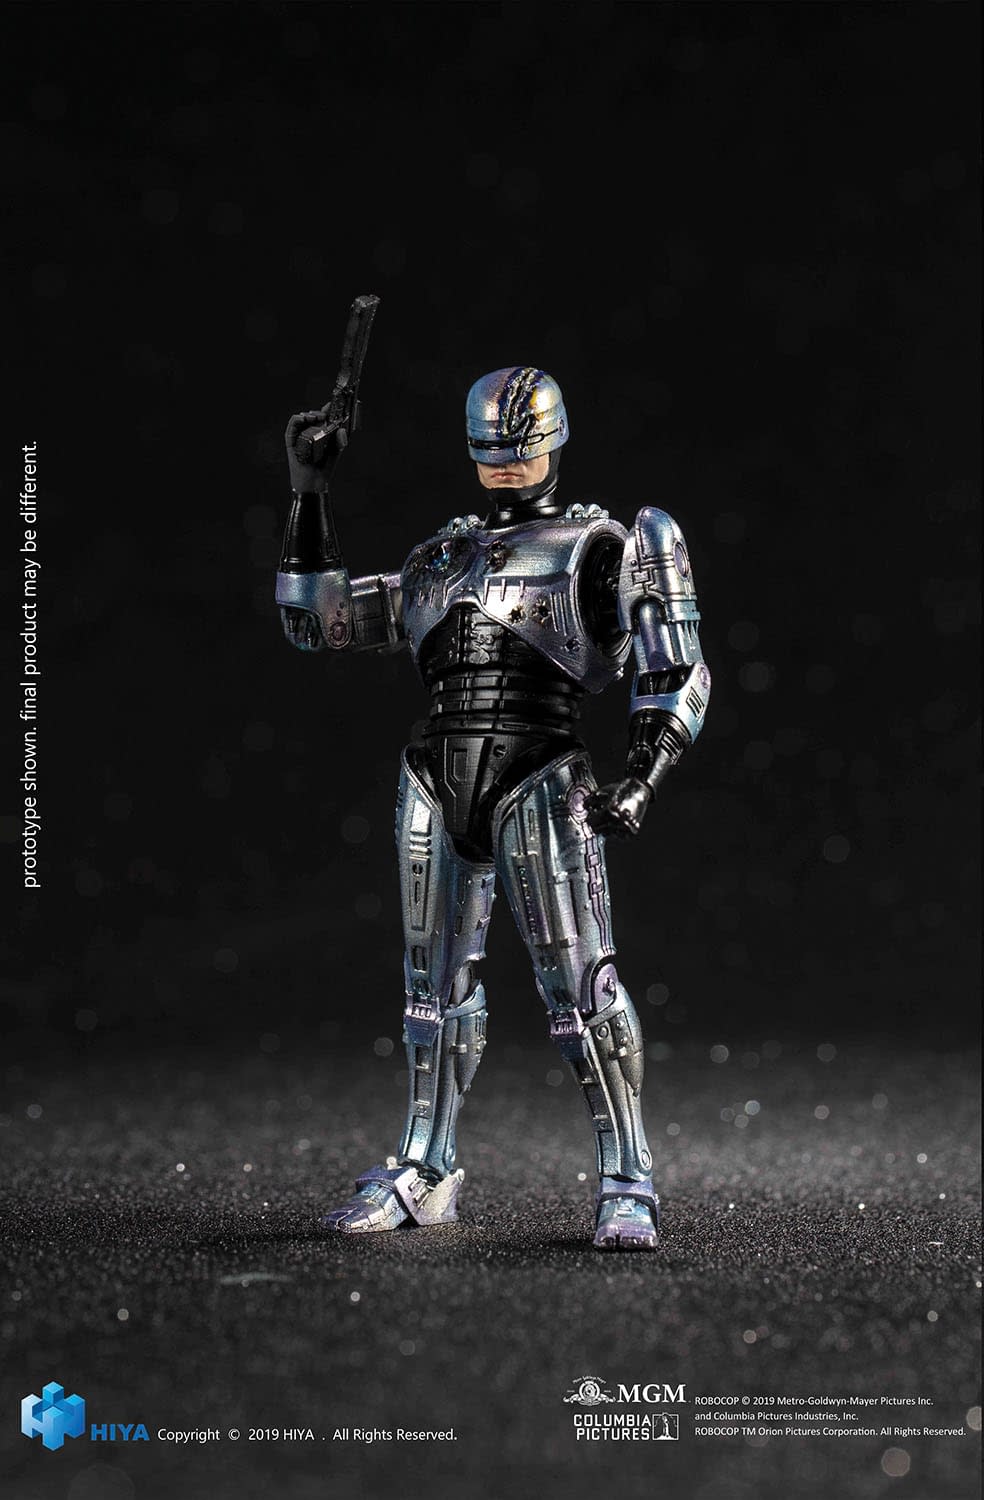 Robocop Comes Back with More Pex Exclusive Figures